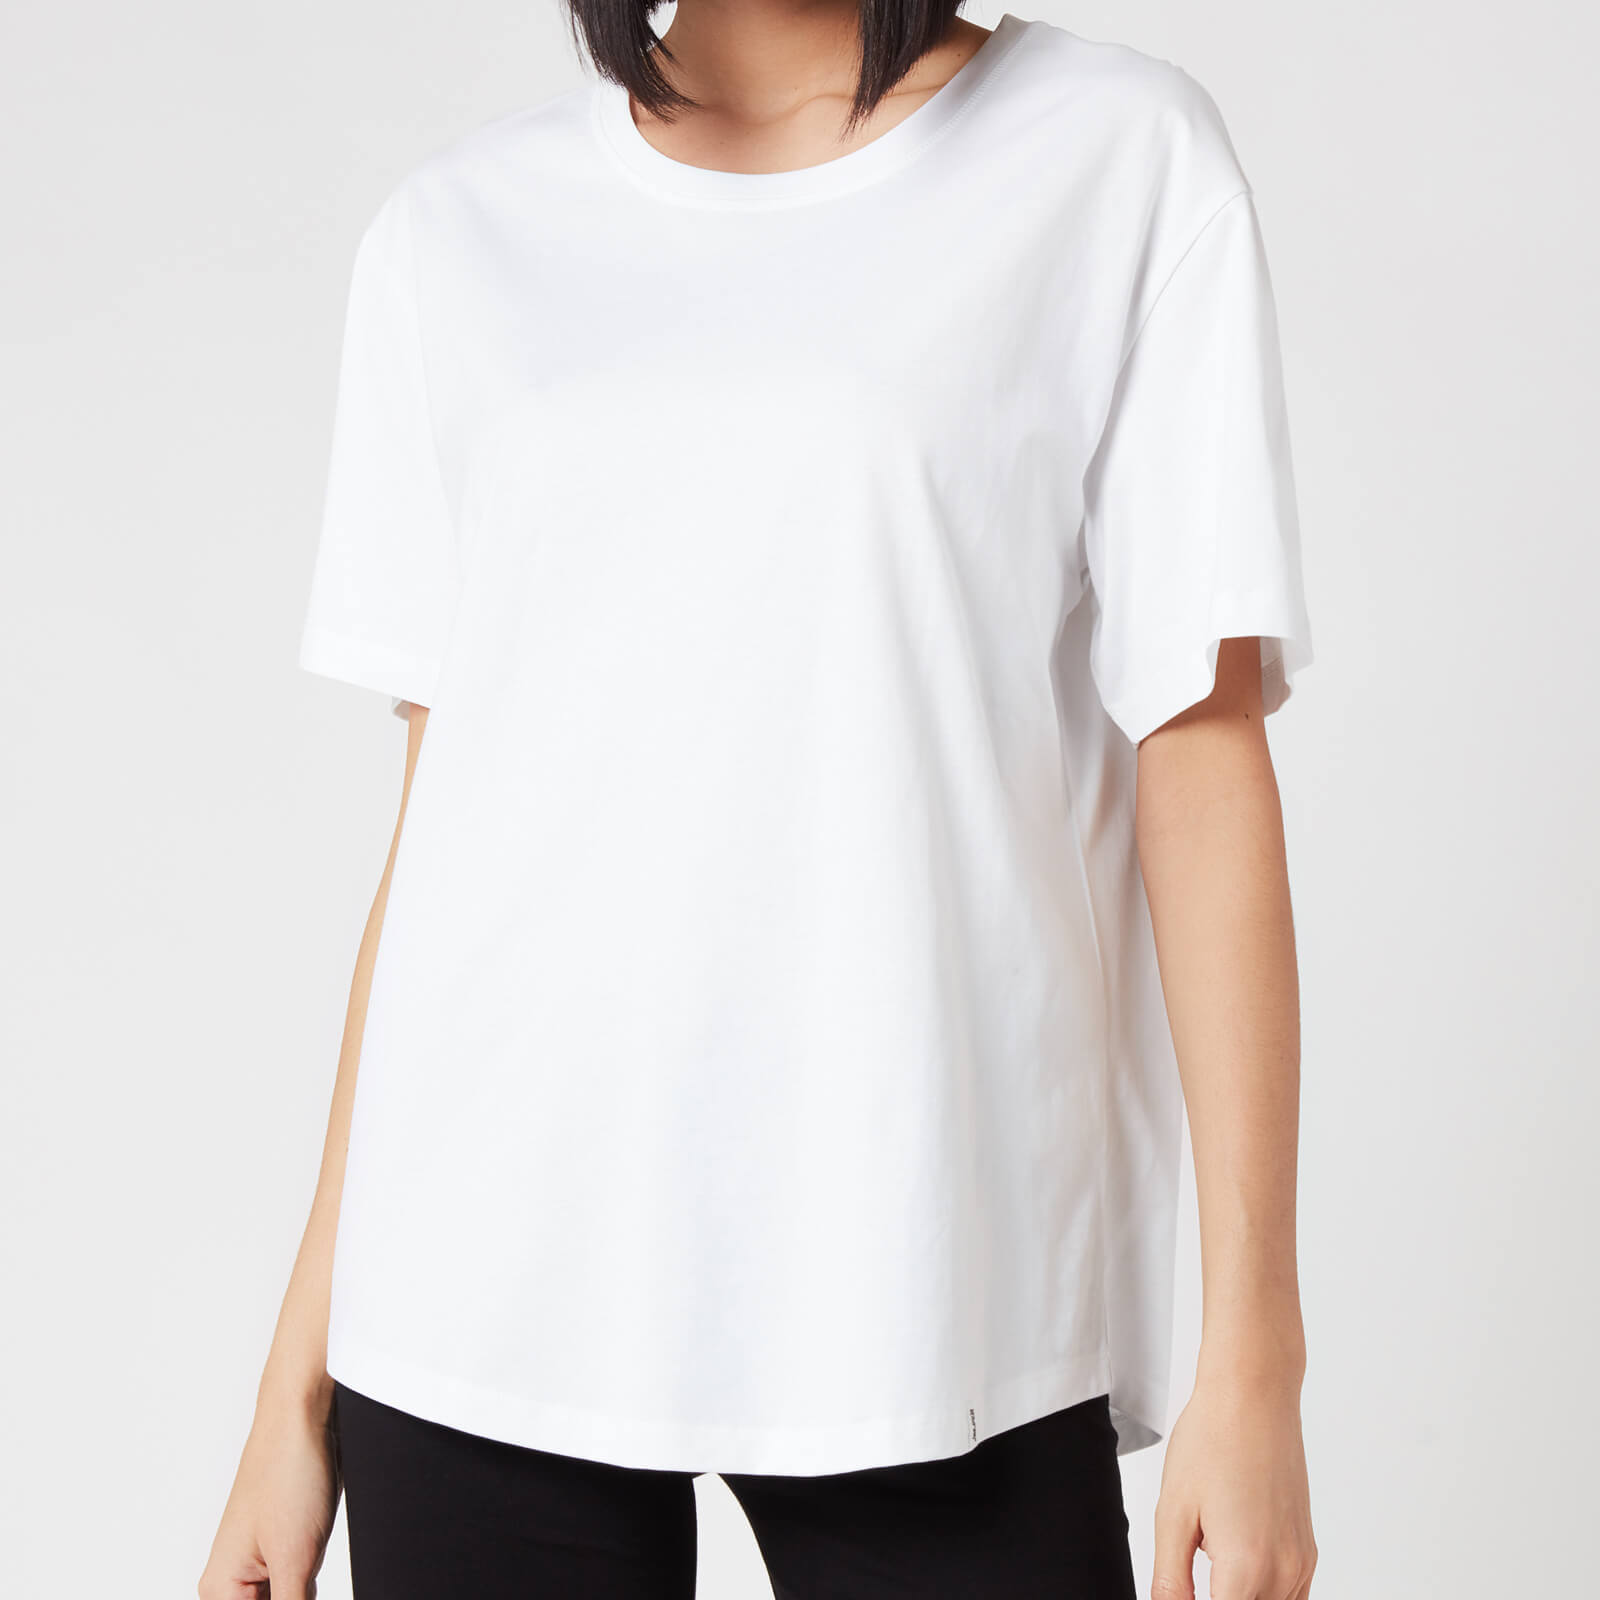 Les Girls Les Boys Women's Single Jersey T-Shirt - White - L